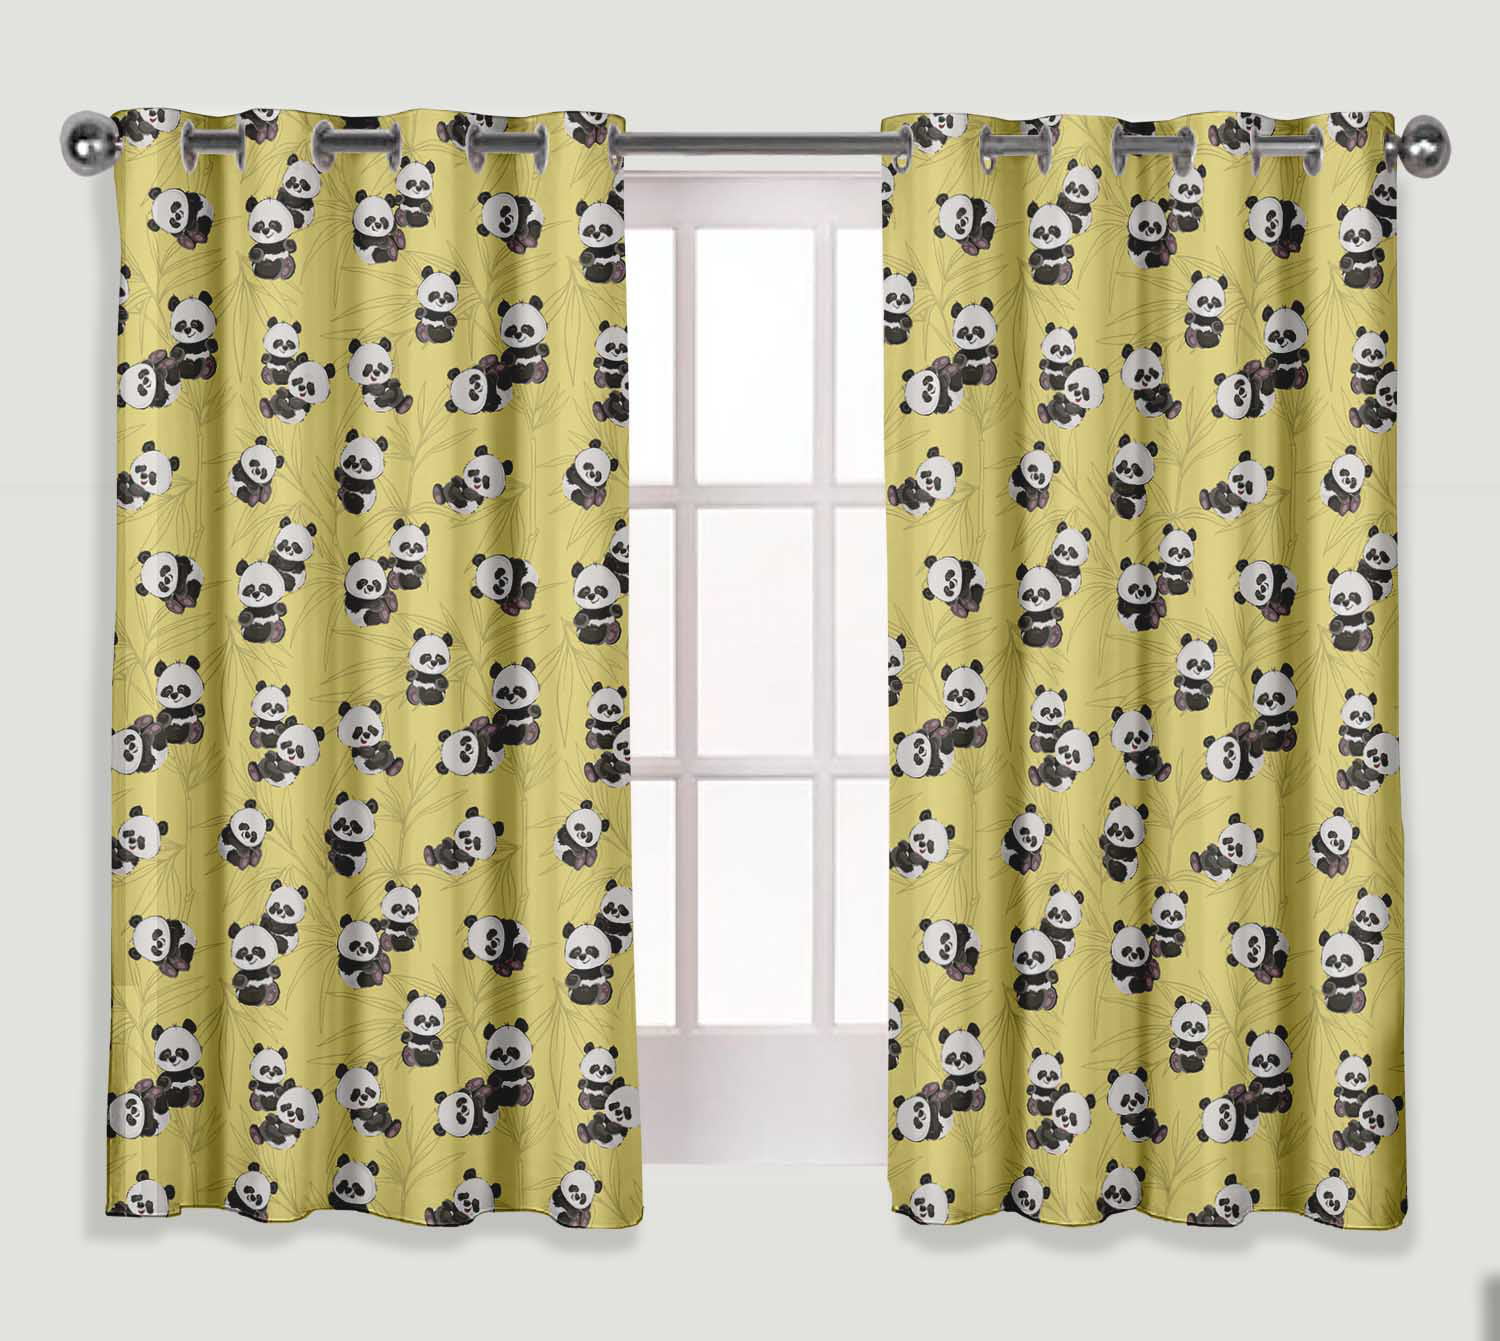 Details about   Pineapple Pattern Door Curtain Cotton Linen Bathroom Bedroom Kitchen Drapes New 